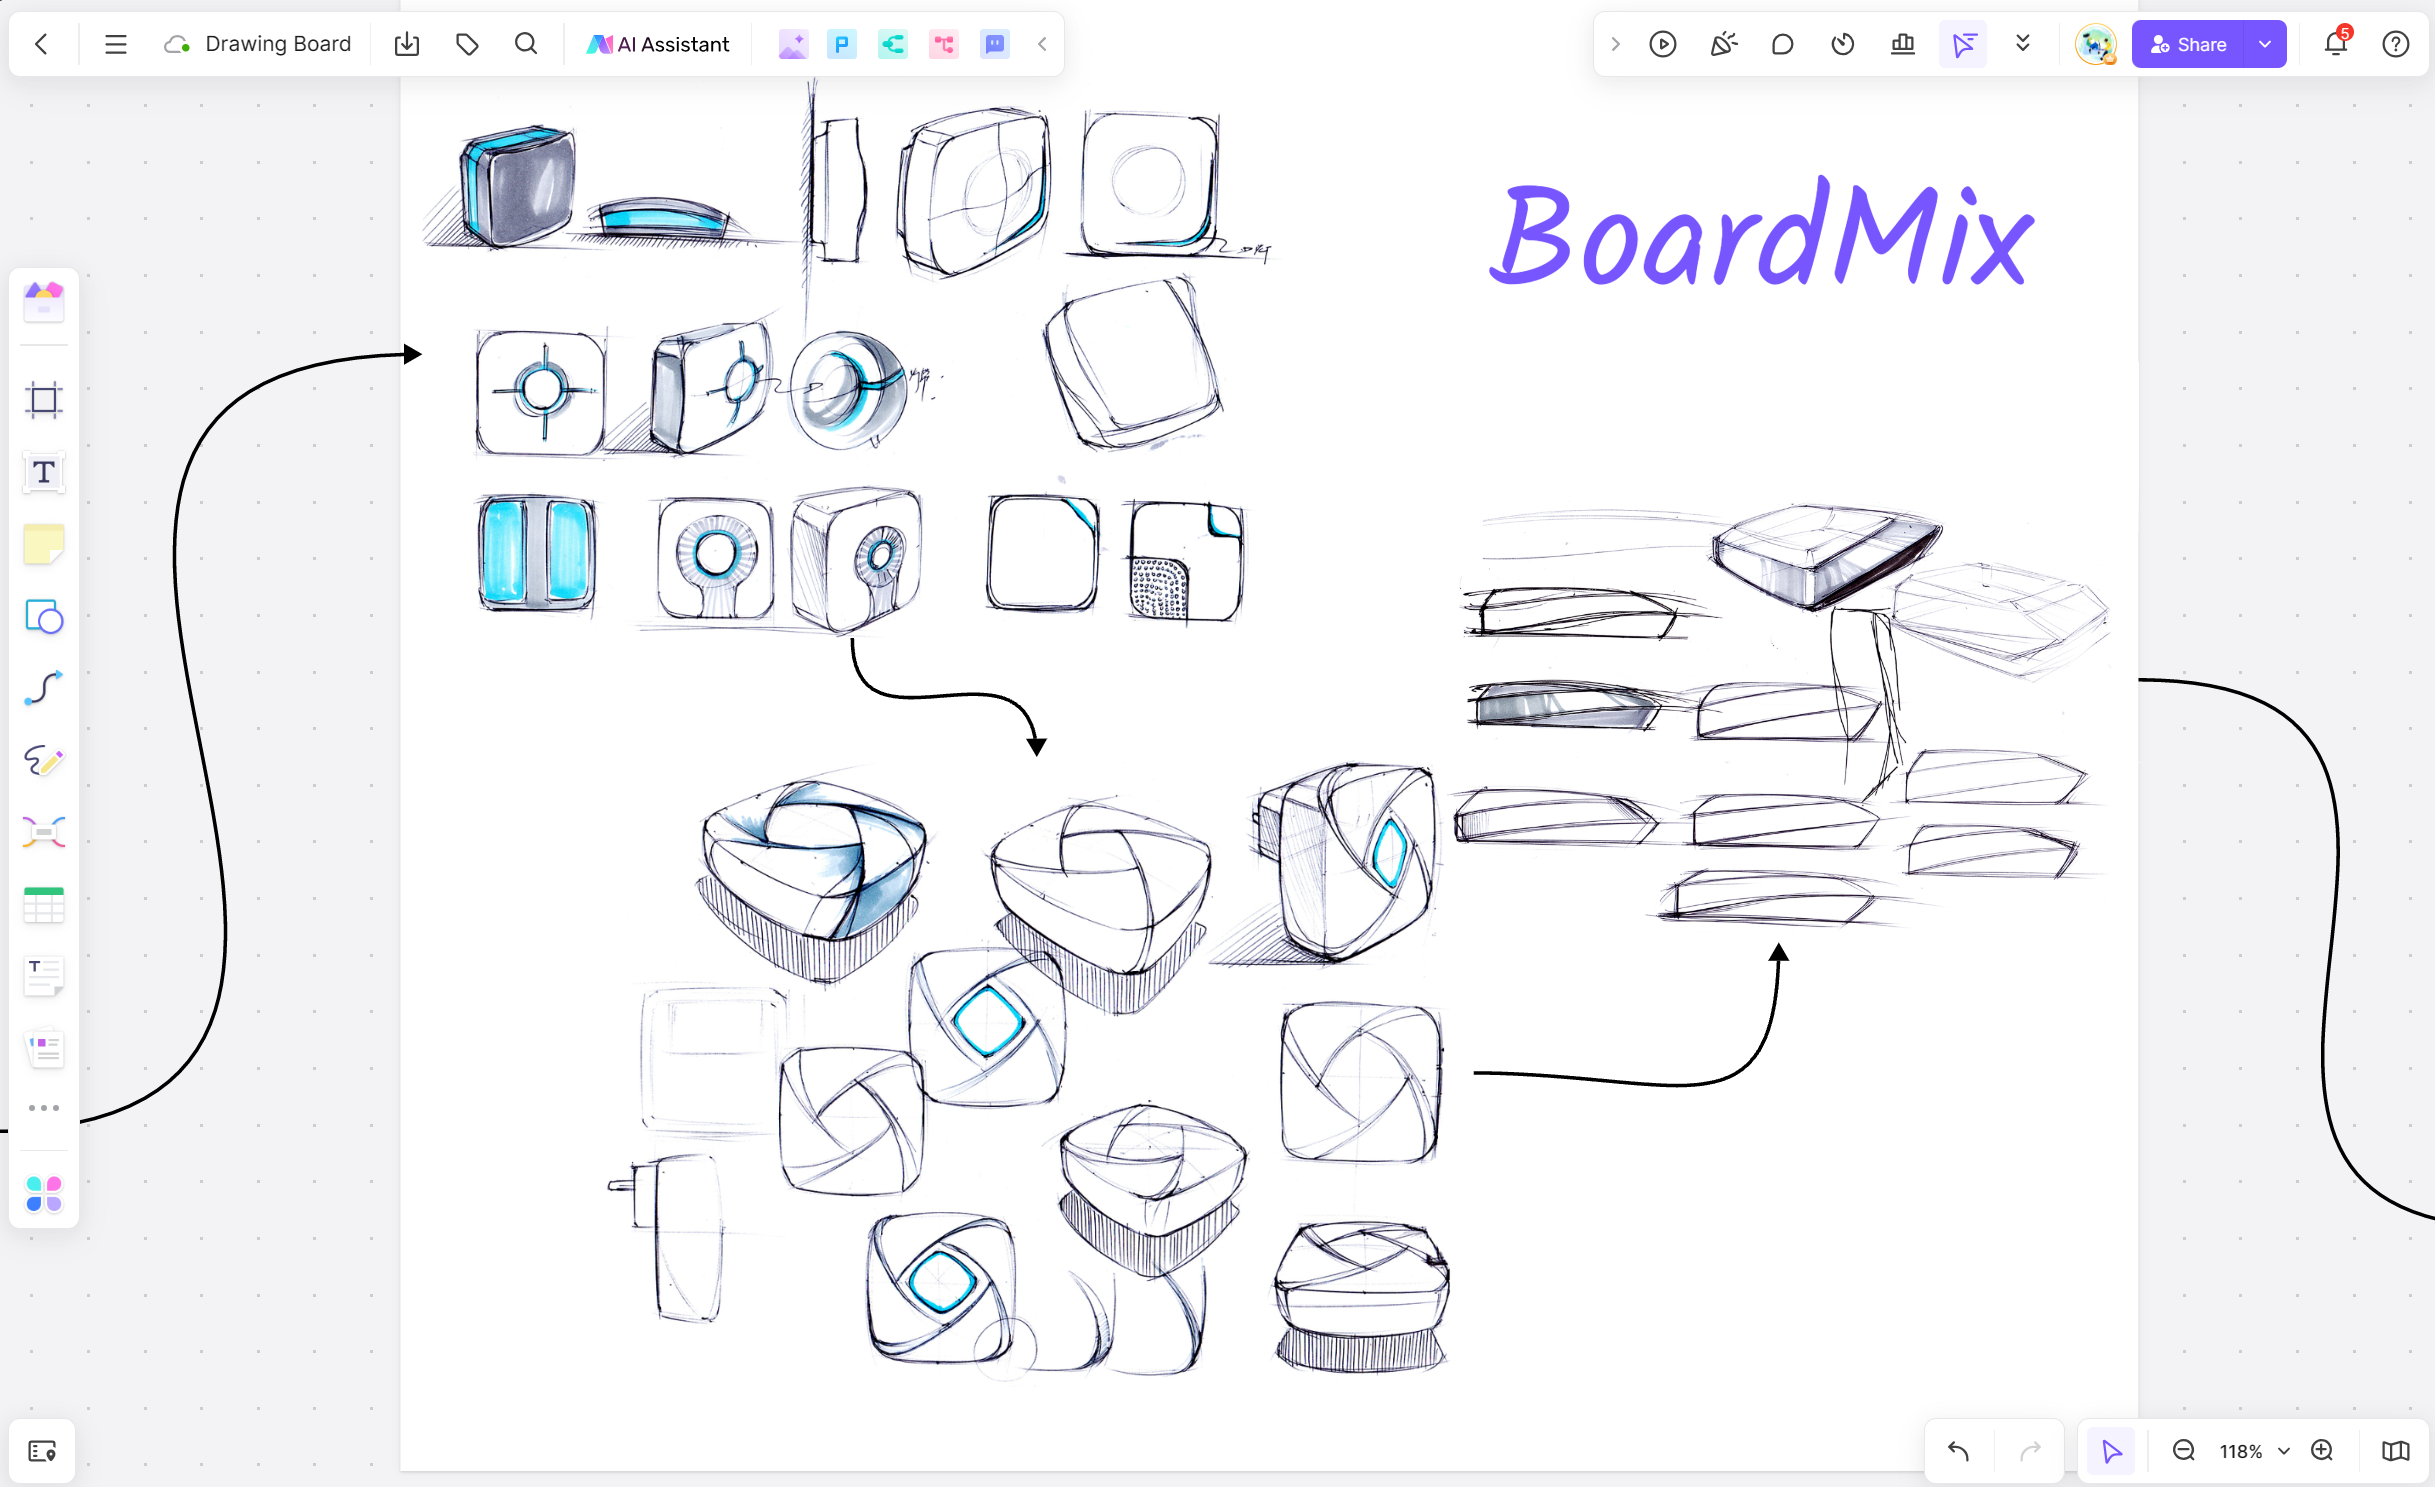 drawing board - boardmix